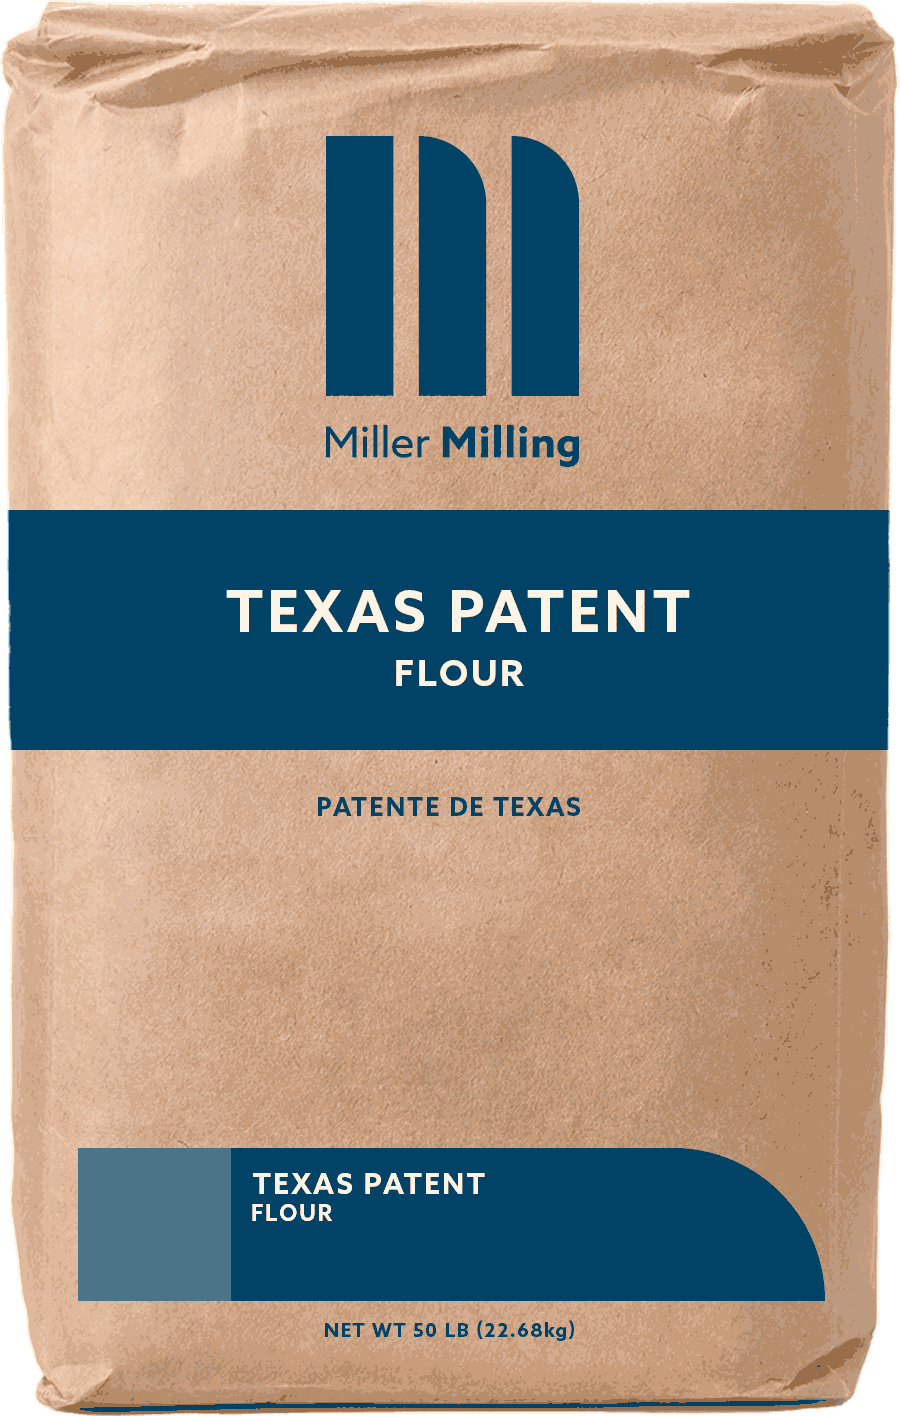 Texas Patent flour